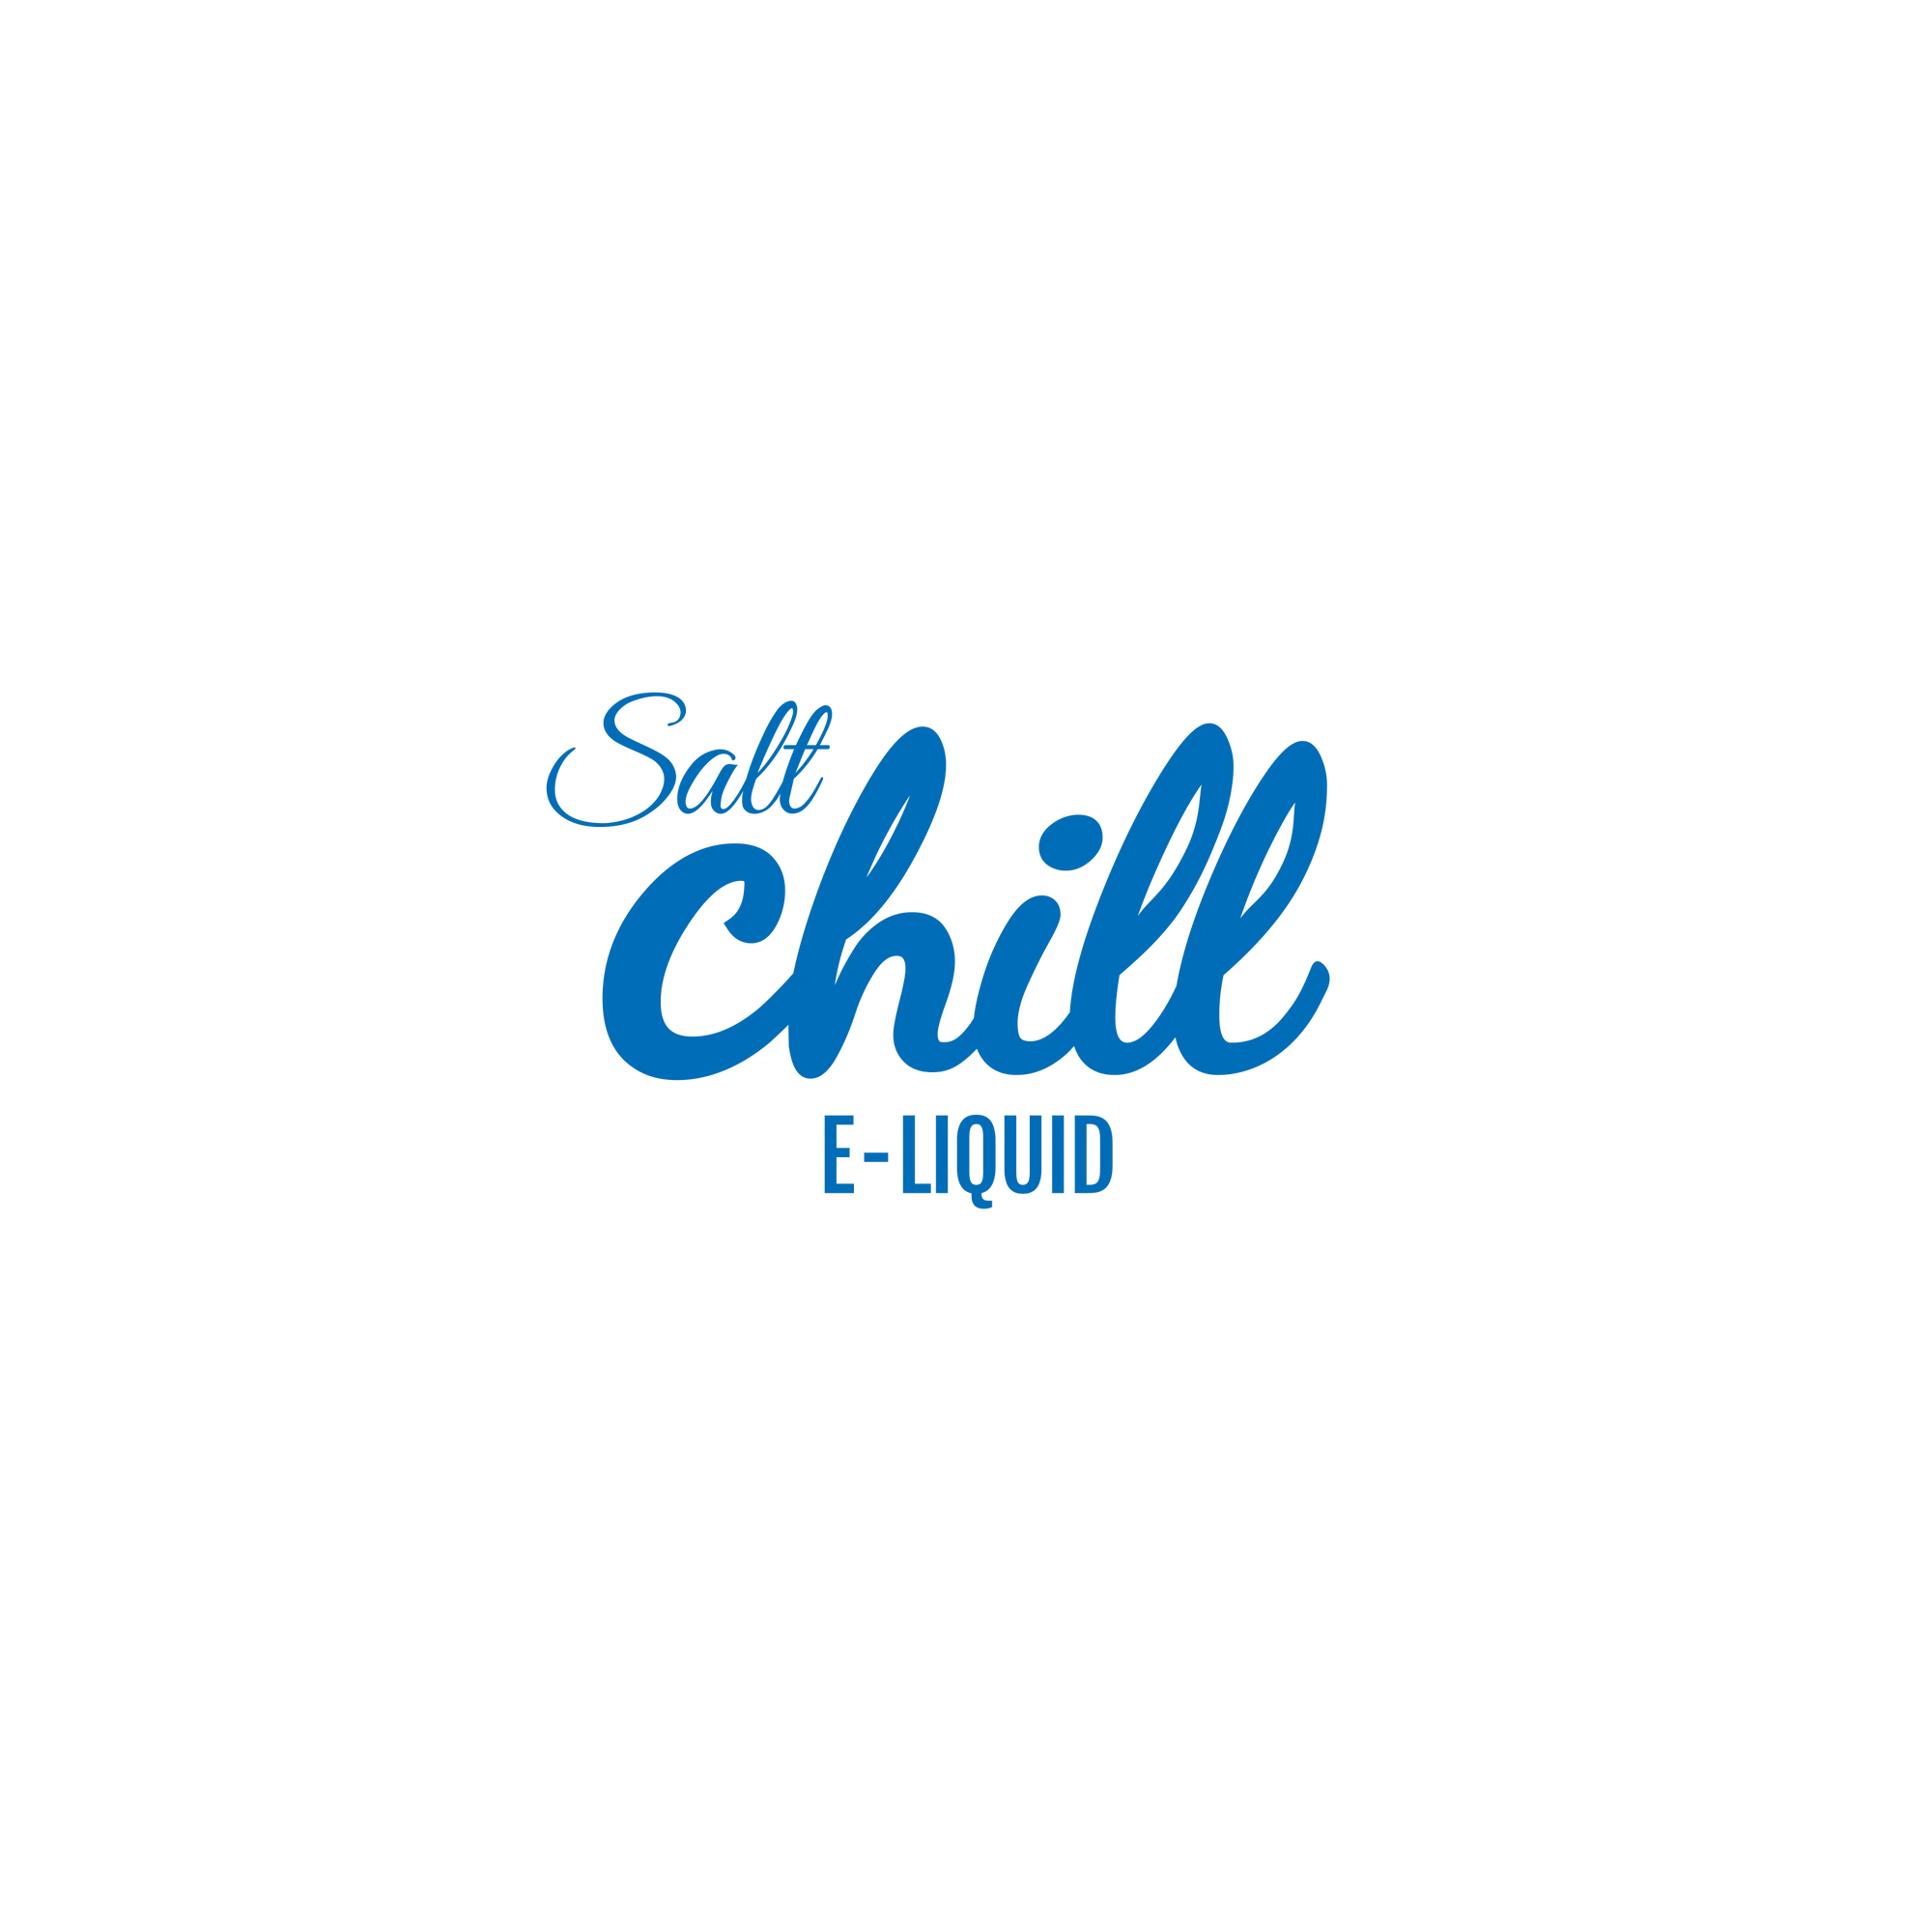 Chill E-Liquid - Salts (30ML) EXCISE TAX*